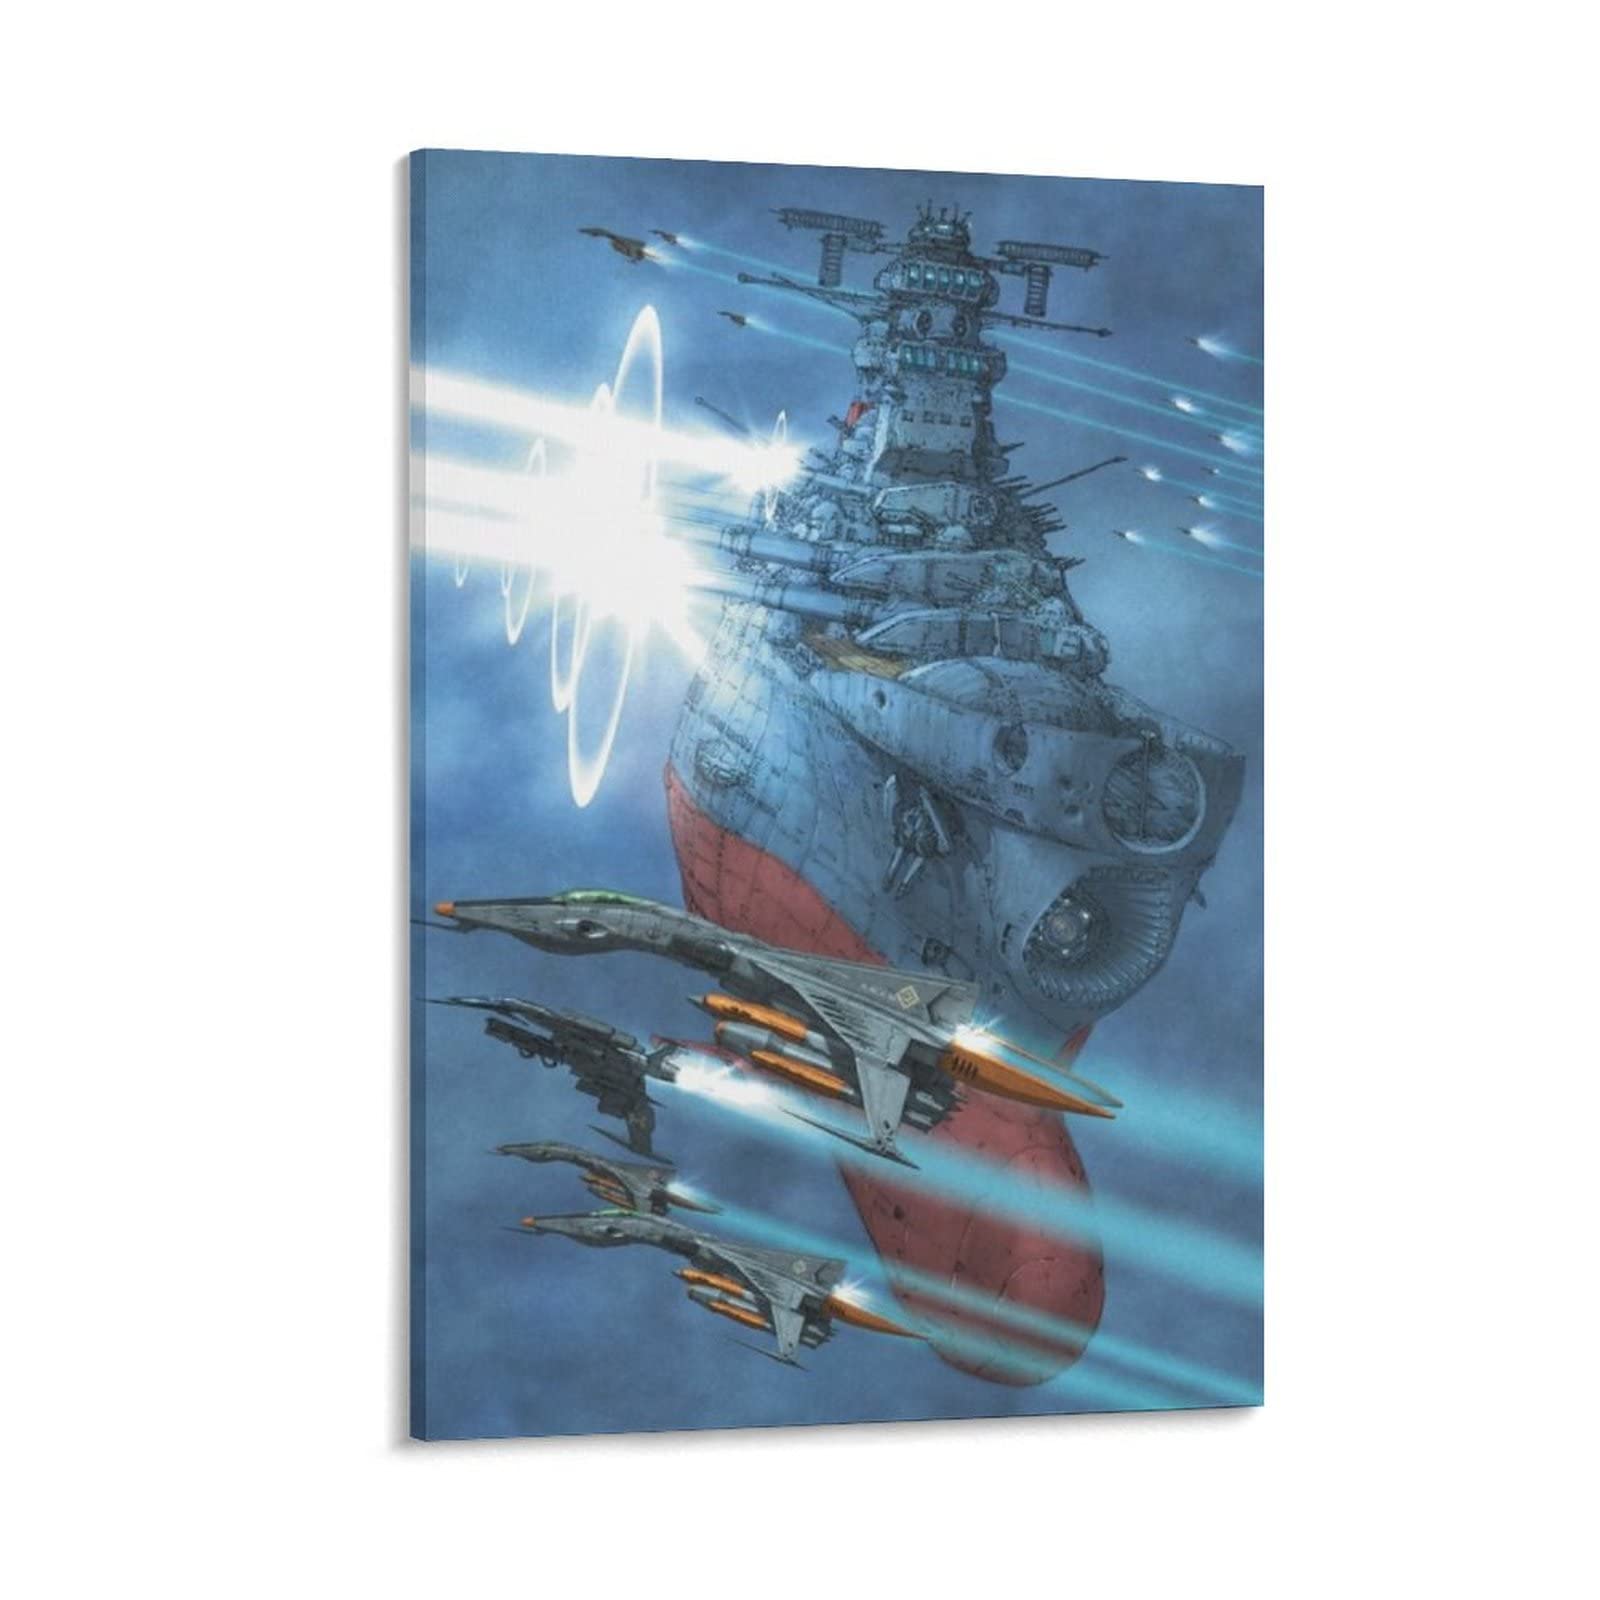 Space Battleship Yamato 2199 Manga Resumes After 5 Years - News - Anime  News Network